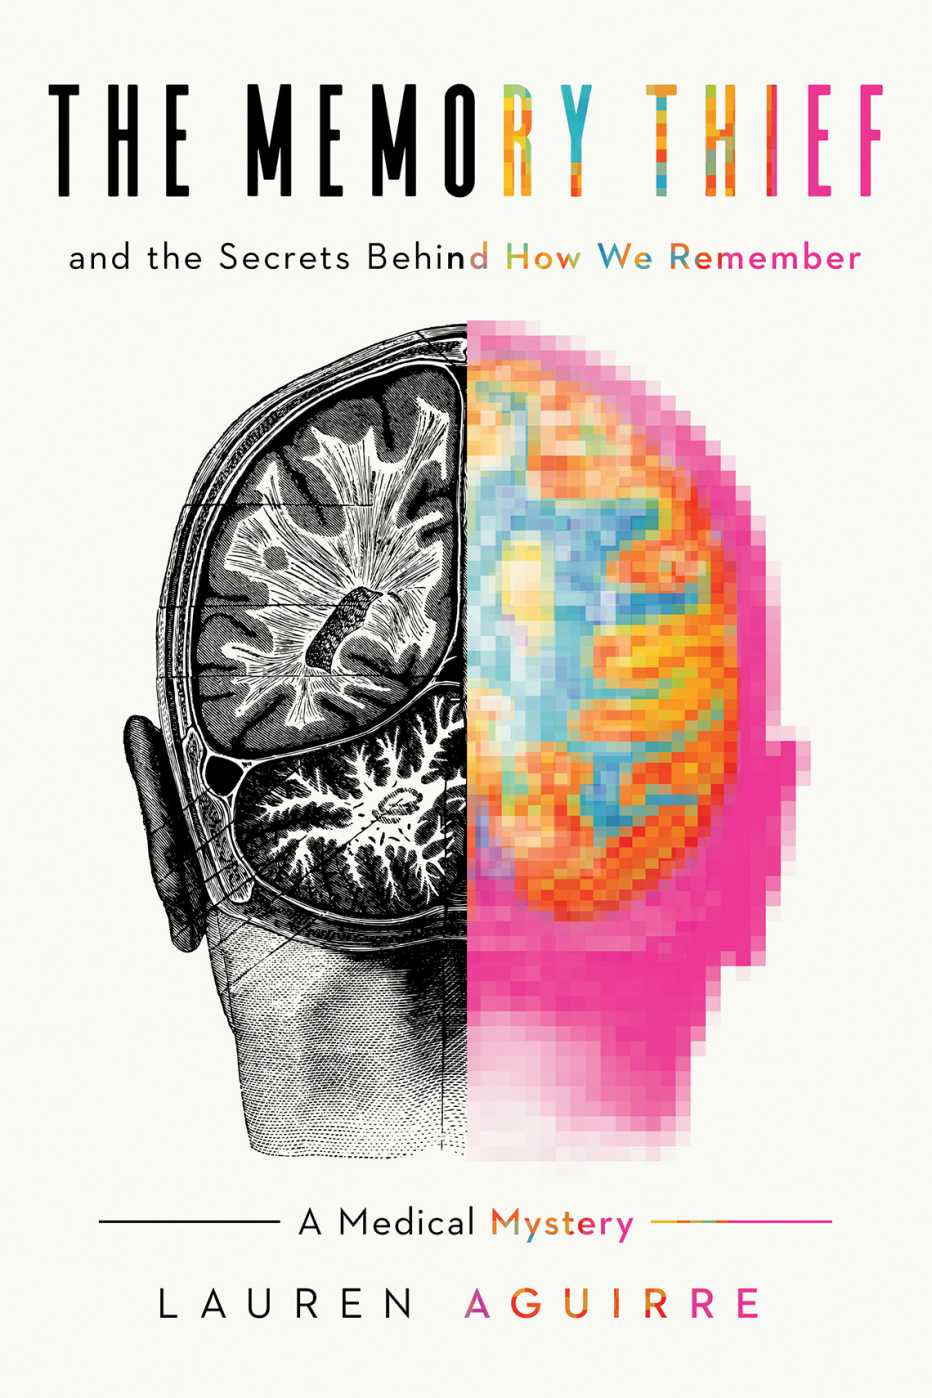 La portada del libro "The Memory Thief: Opioids, Alzheimer’s & A Medical Mystery" por Lauren Aguirre. 